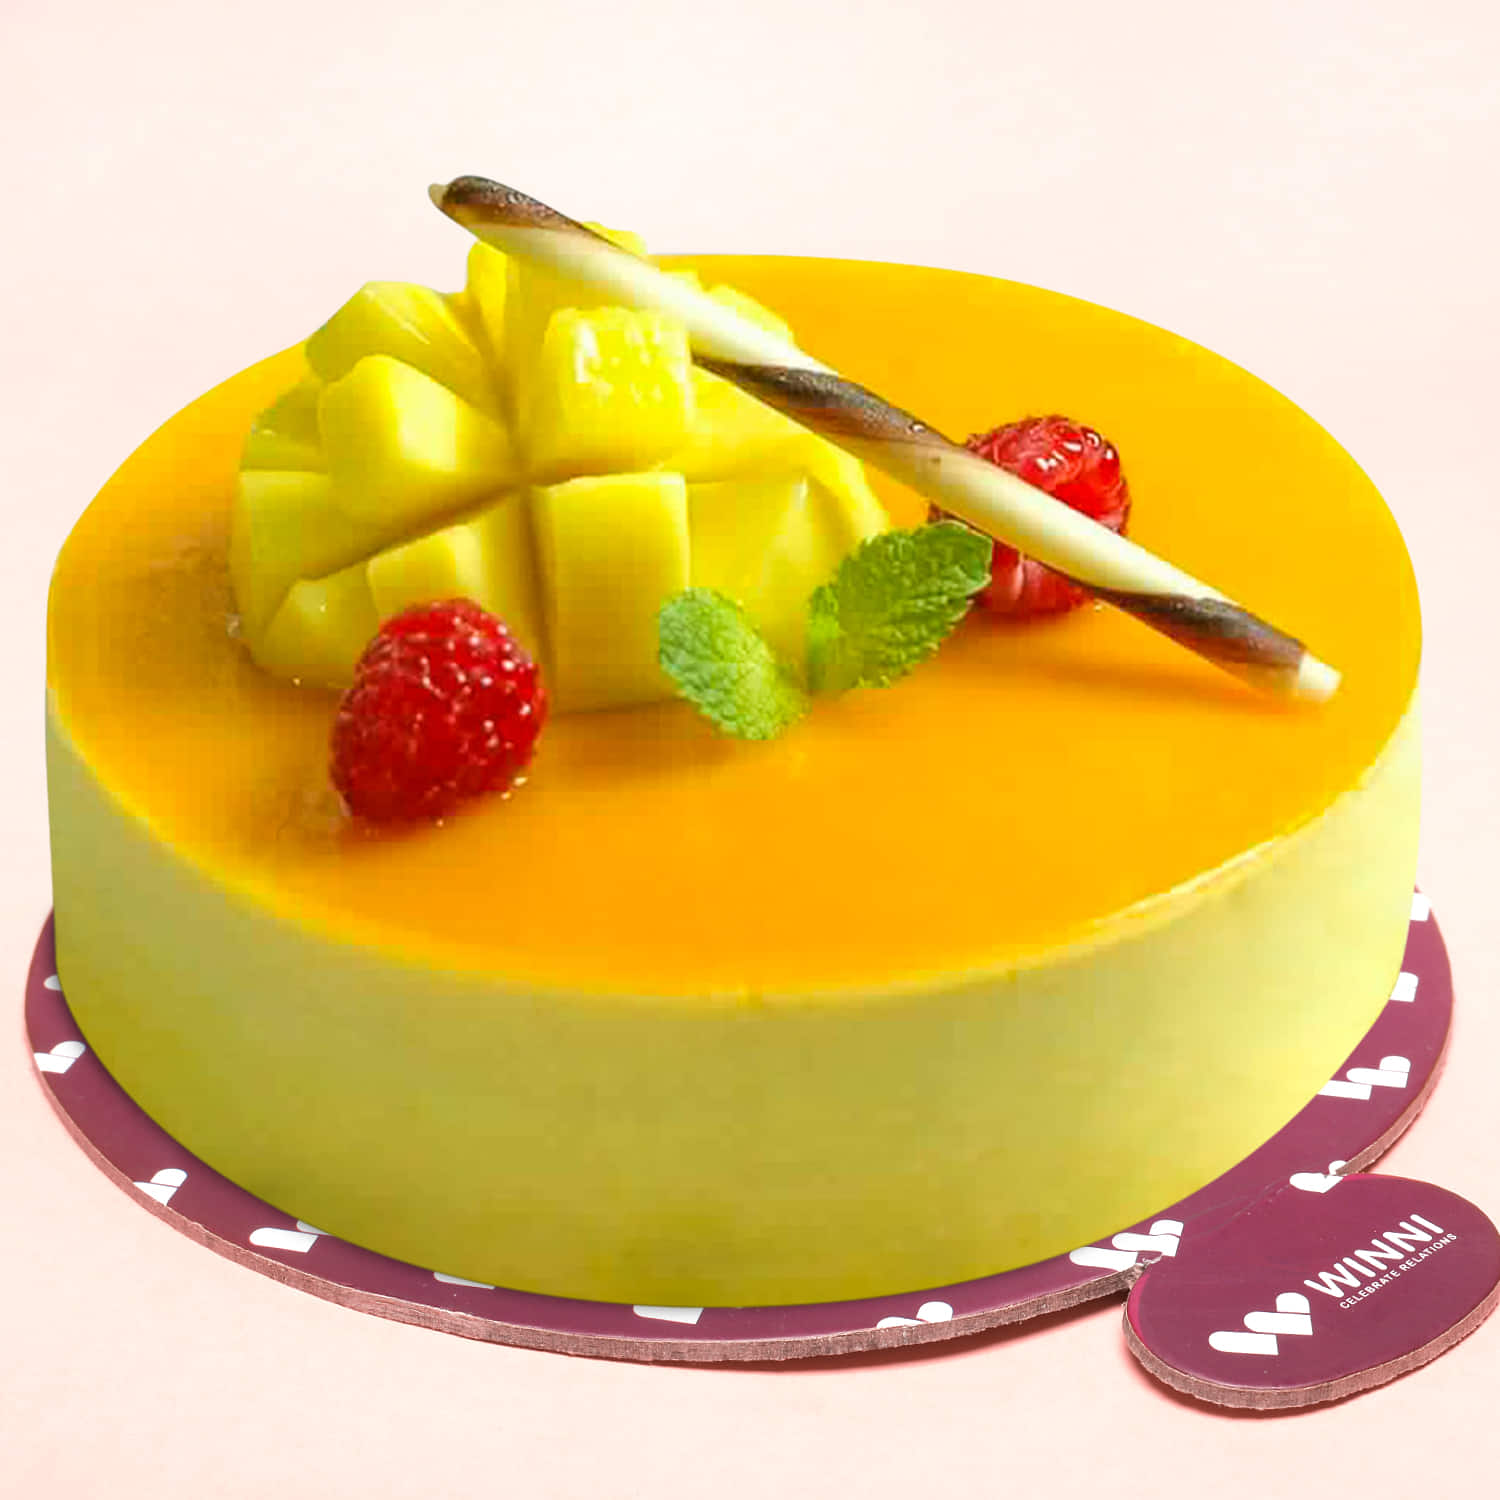 Mango and pineapple ice cream cake recipe | Coles